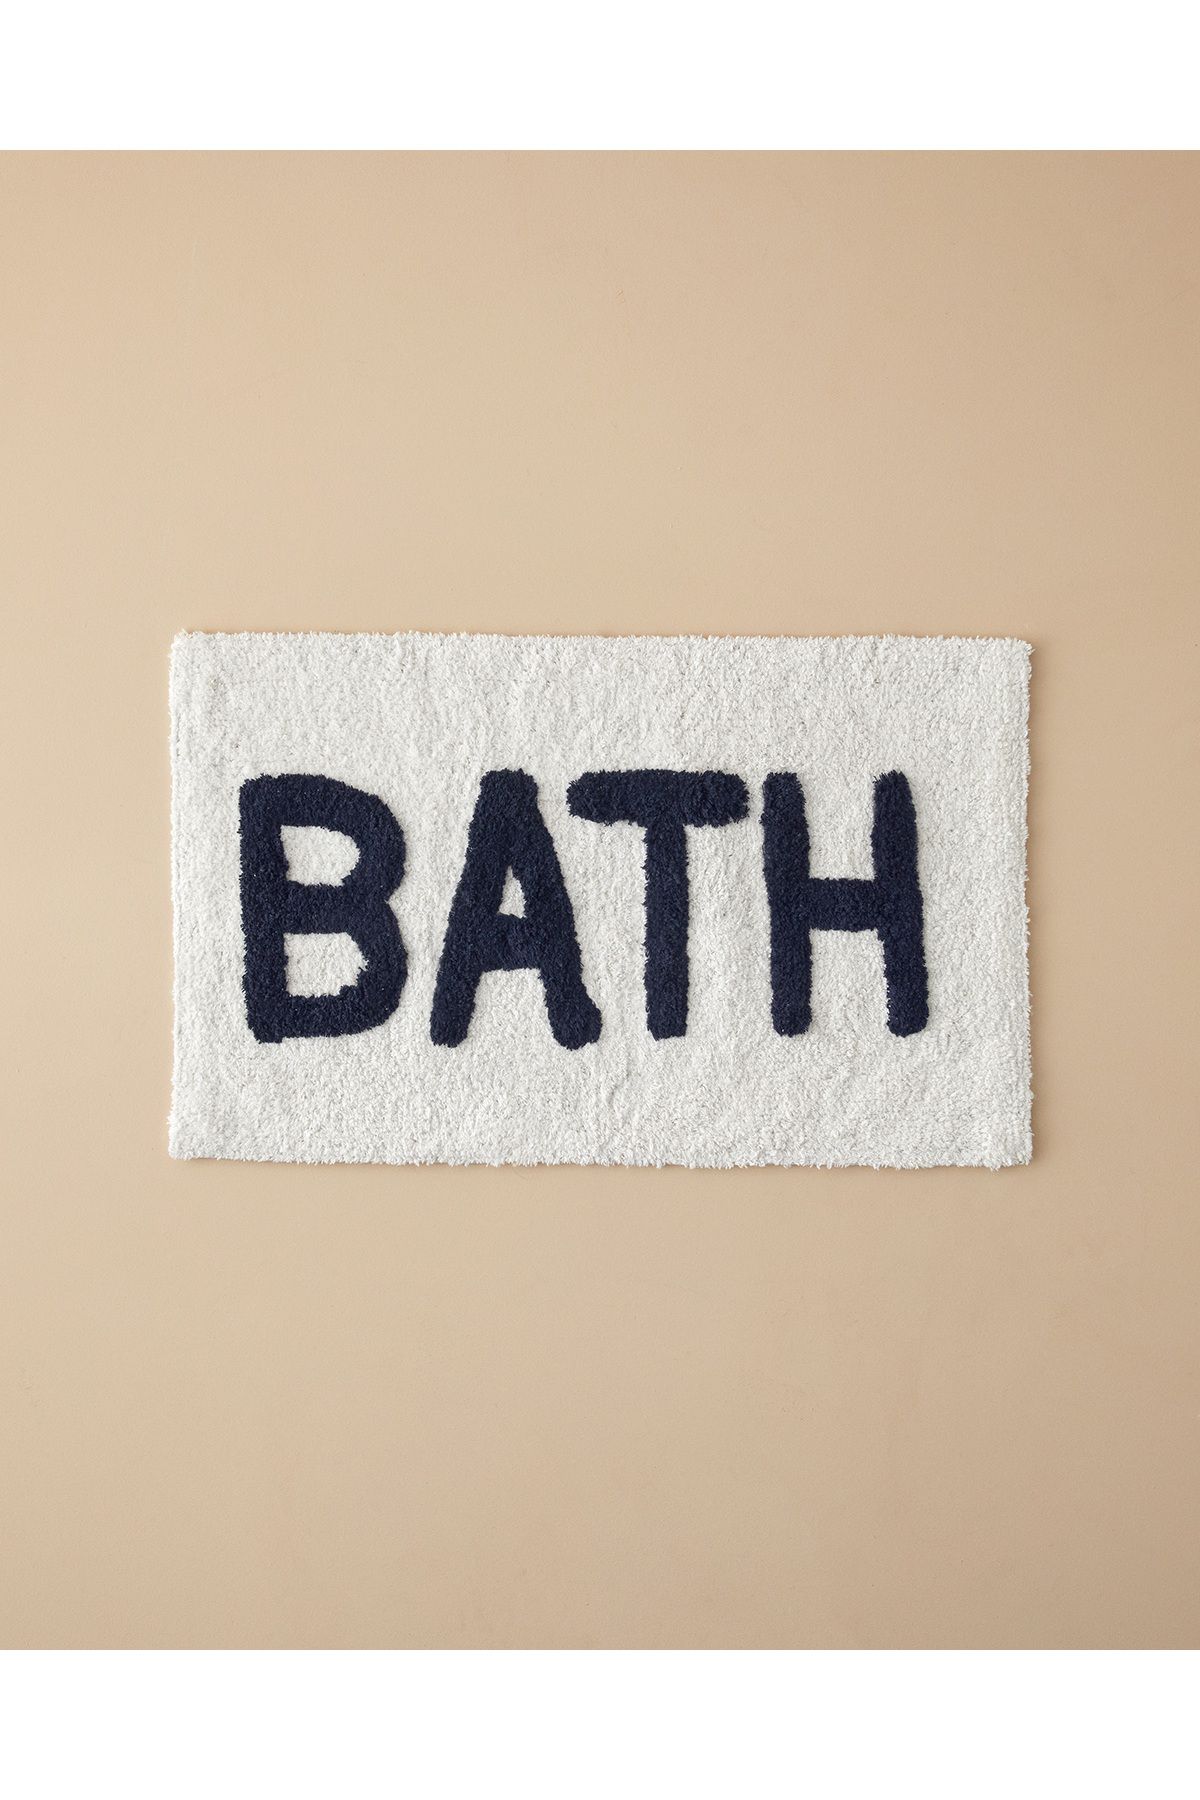 English Home Bath Bliss Pamuklu Banyo Paspası Lacivert-Beyaz